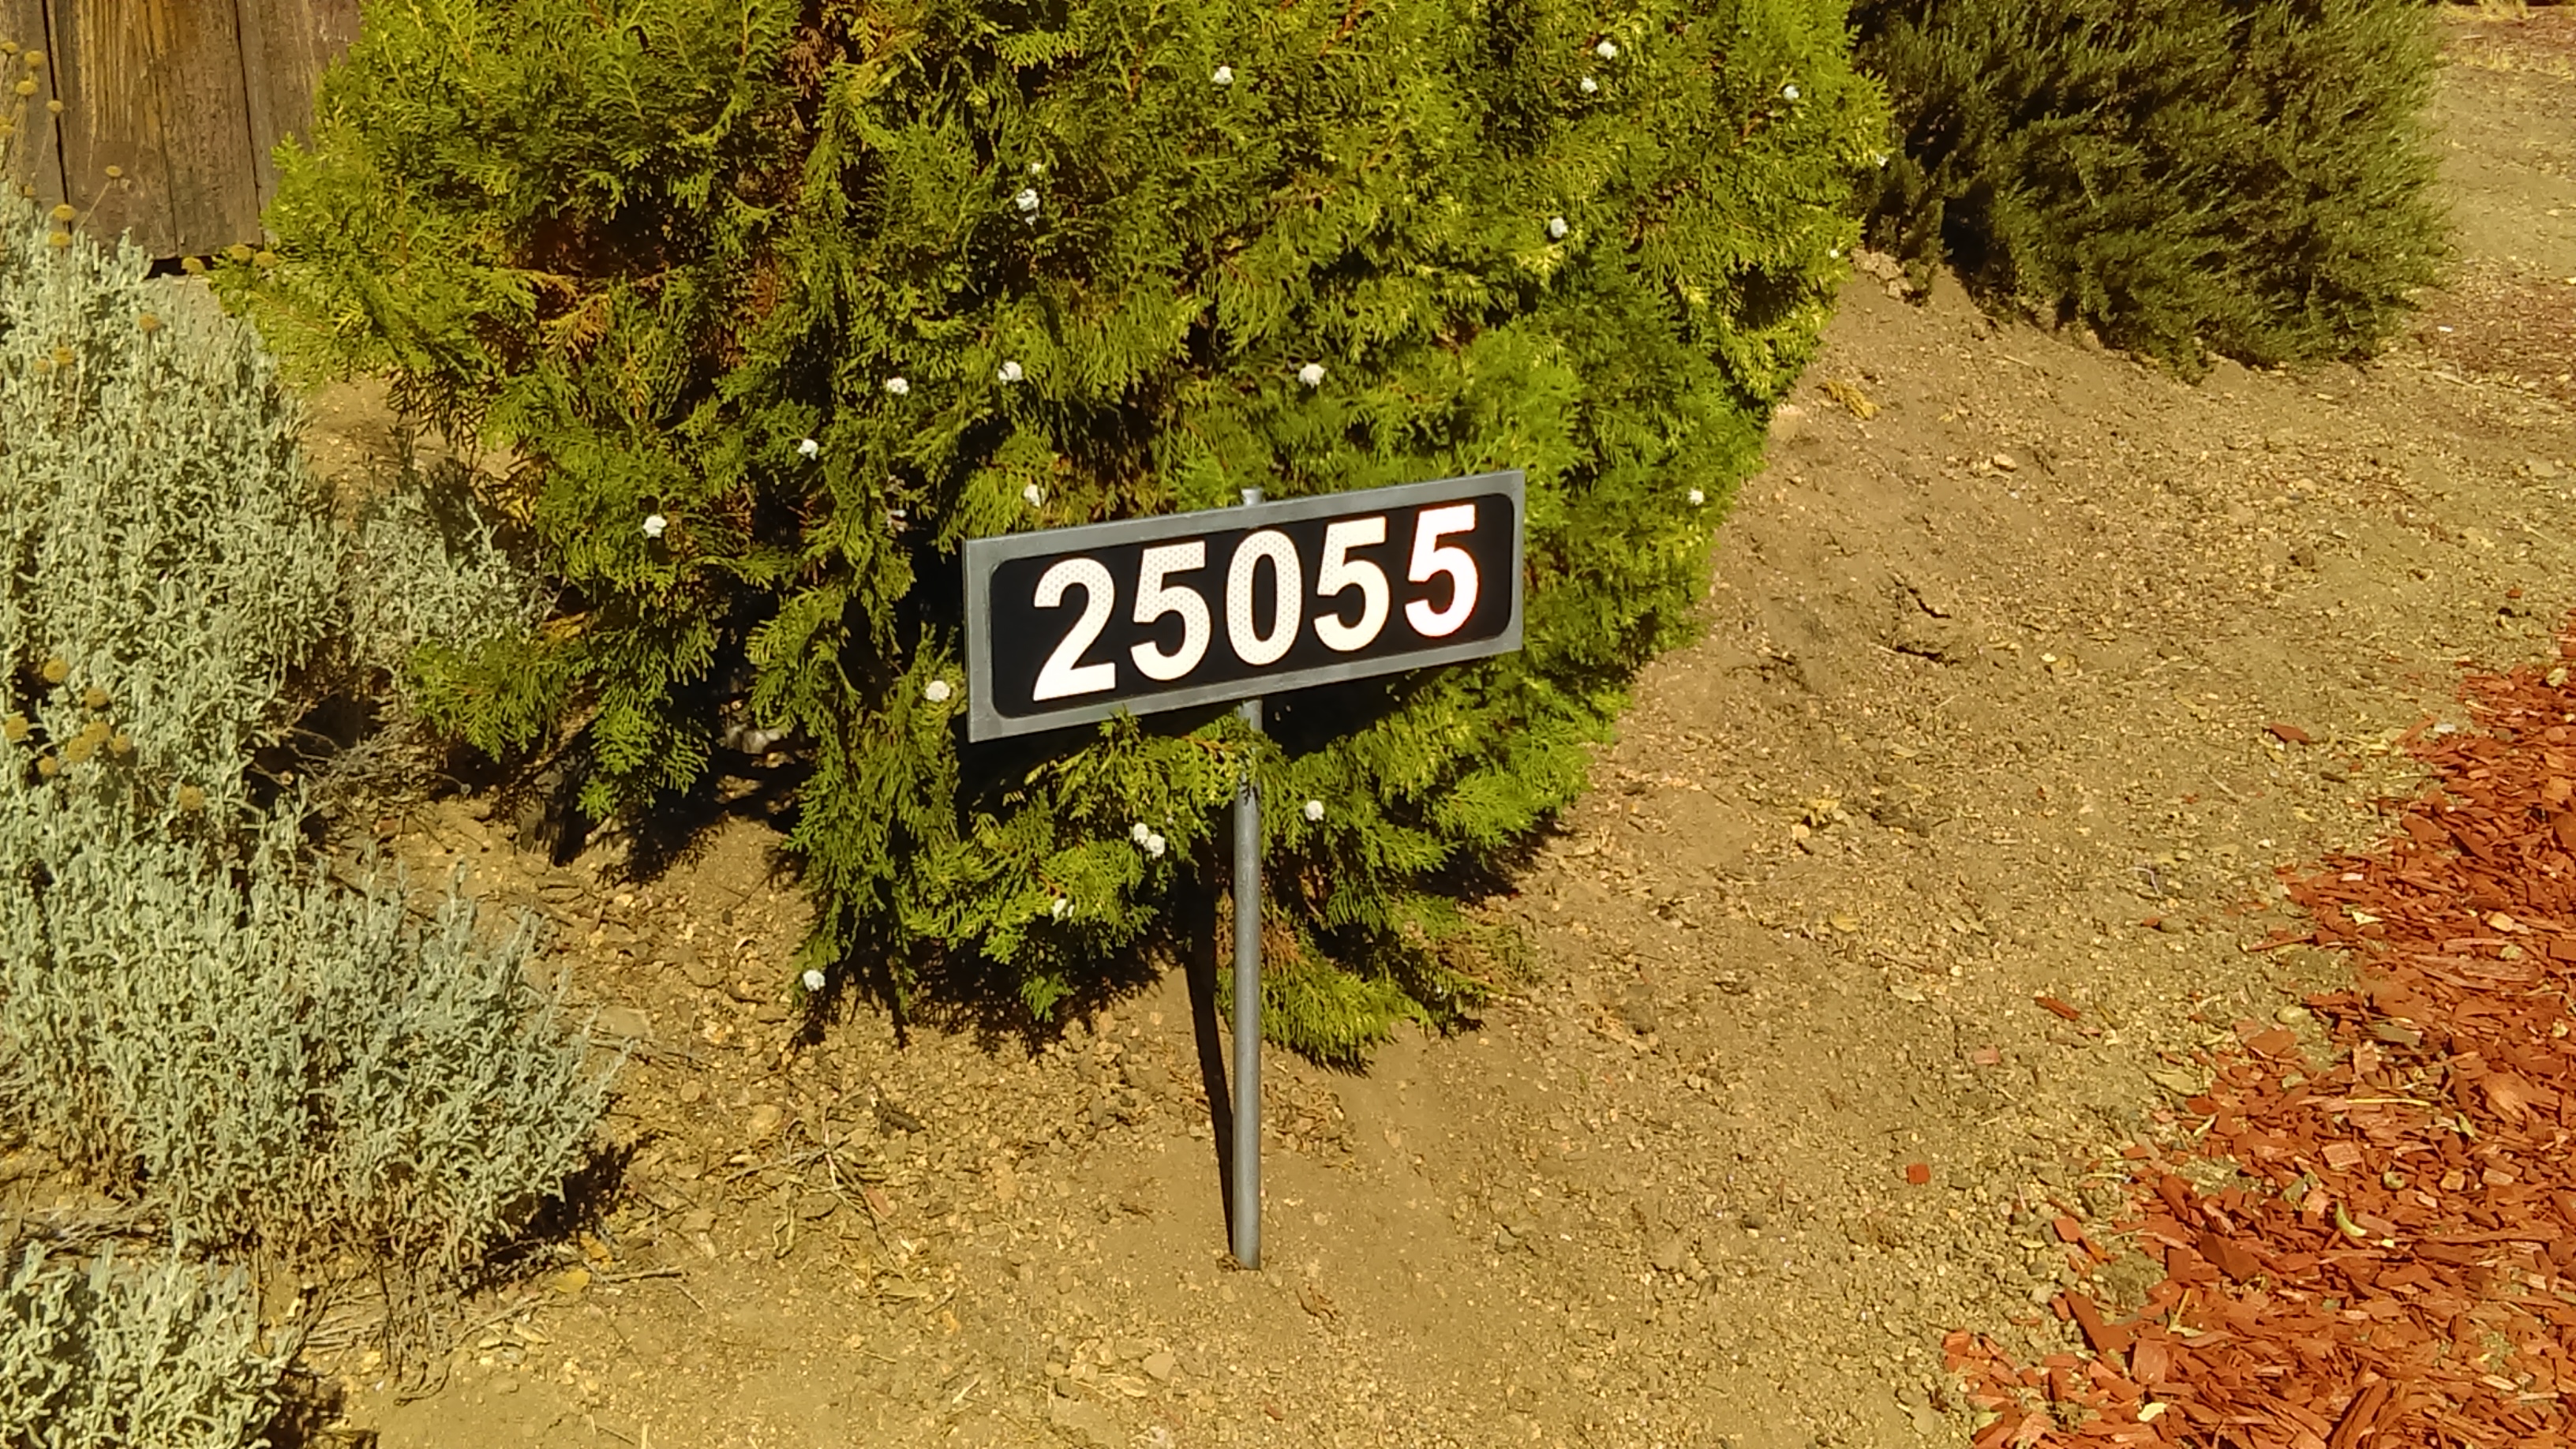 IMAG0178 - Reflective Address Sign